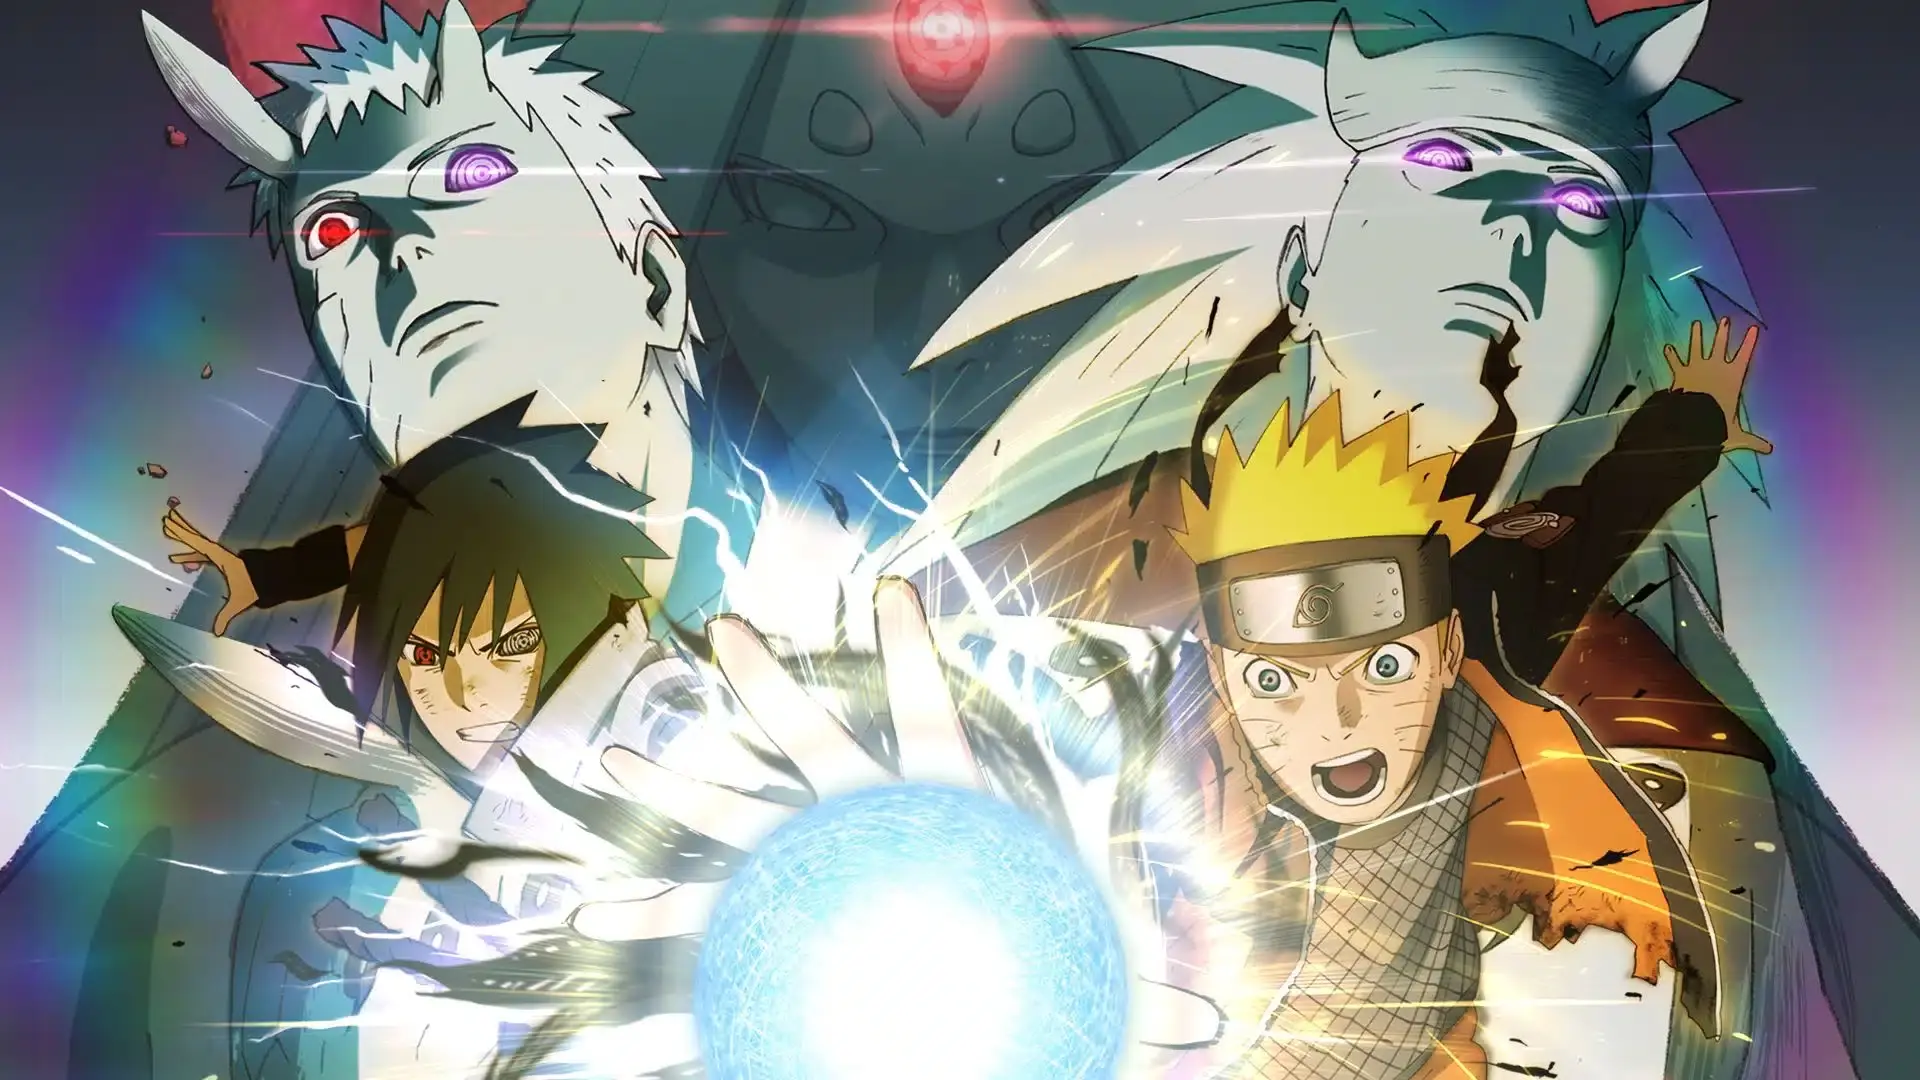 Orden cronológico para ver Naruto: serie anime, películas y OVAs